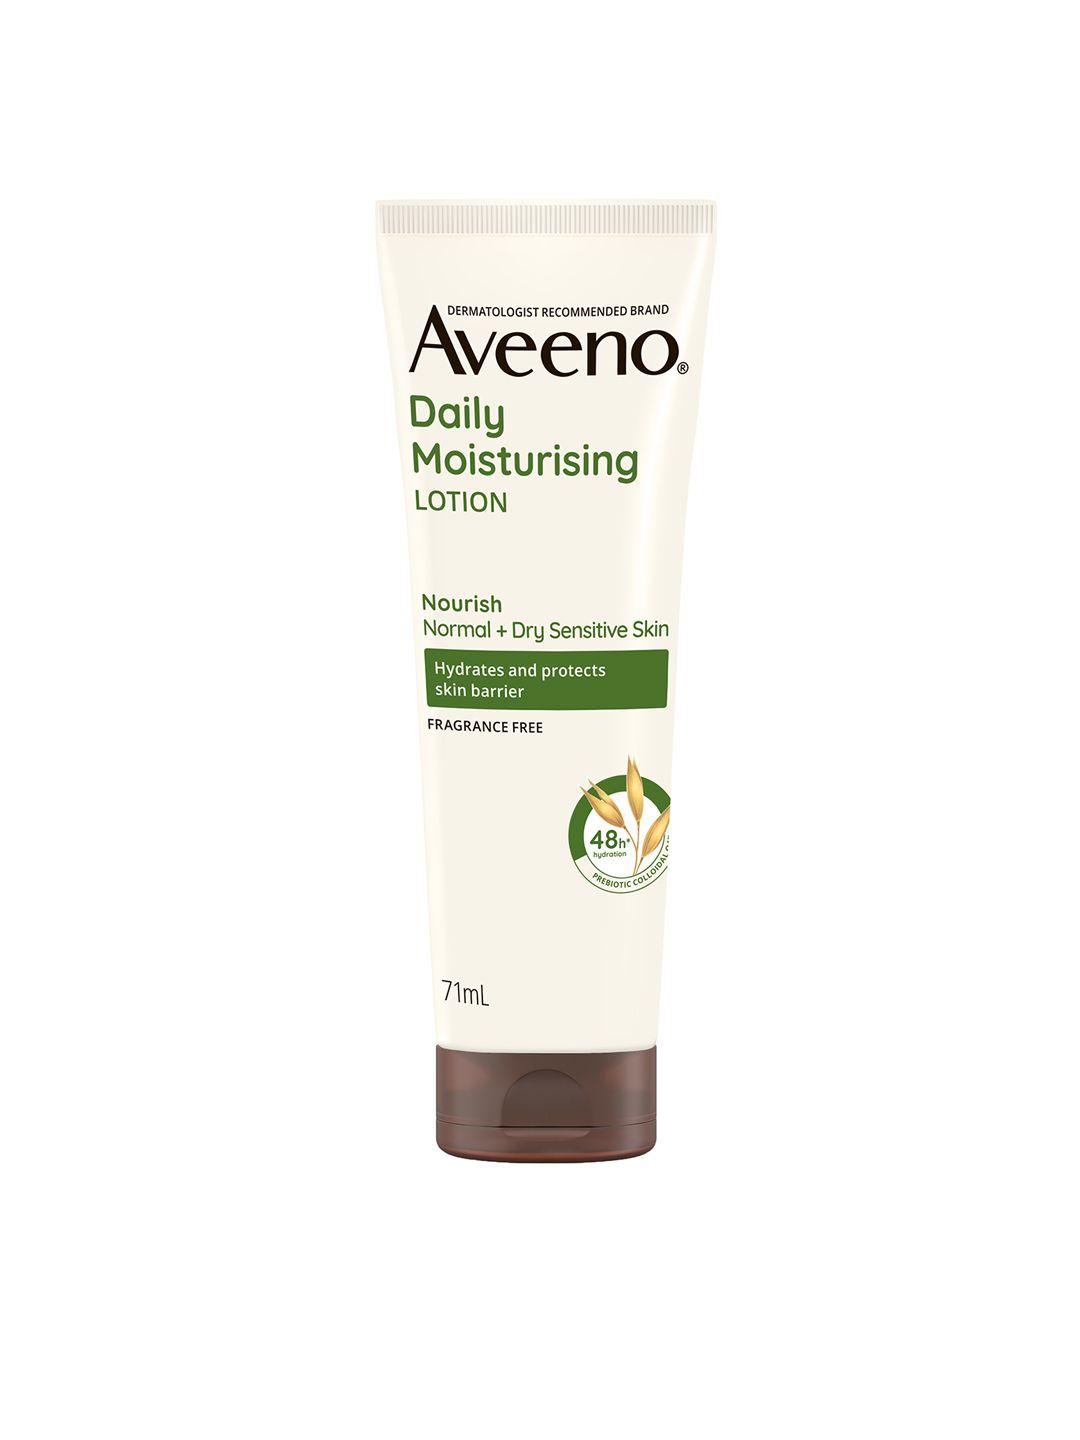 aveeno daily moisturizing lotion for dry skin - 71 ml